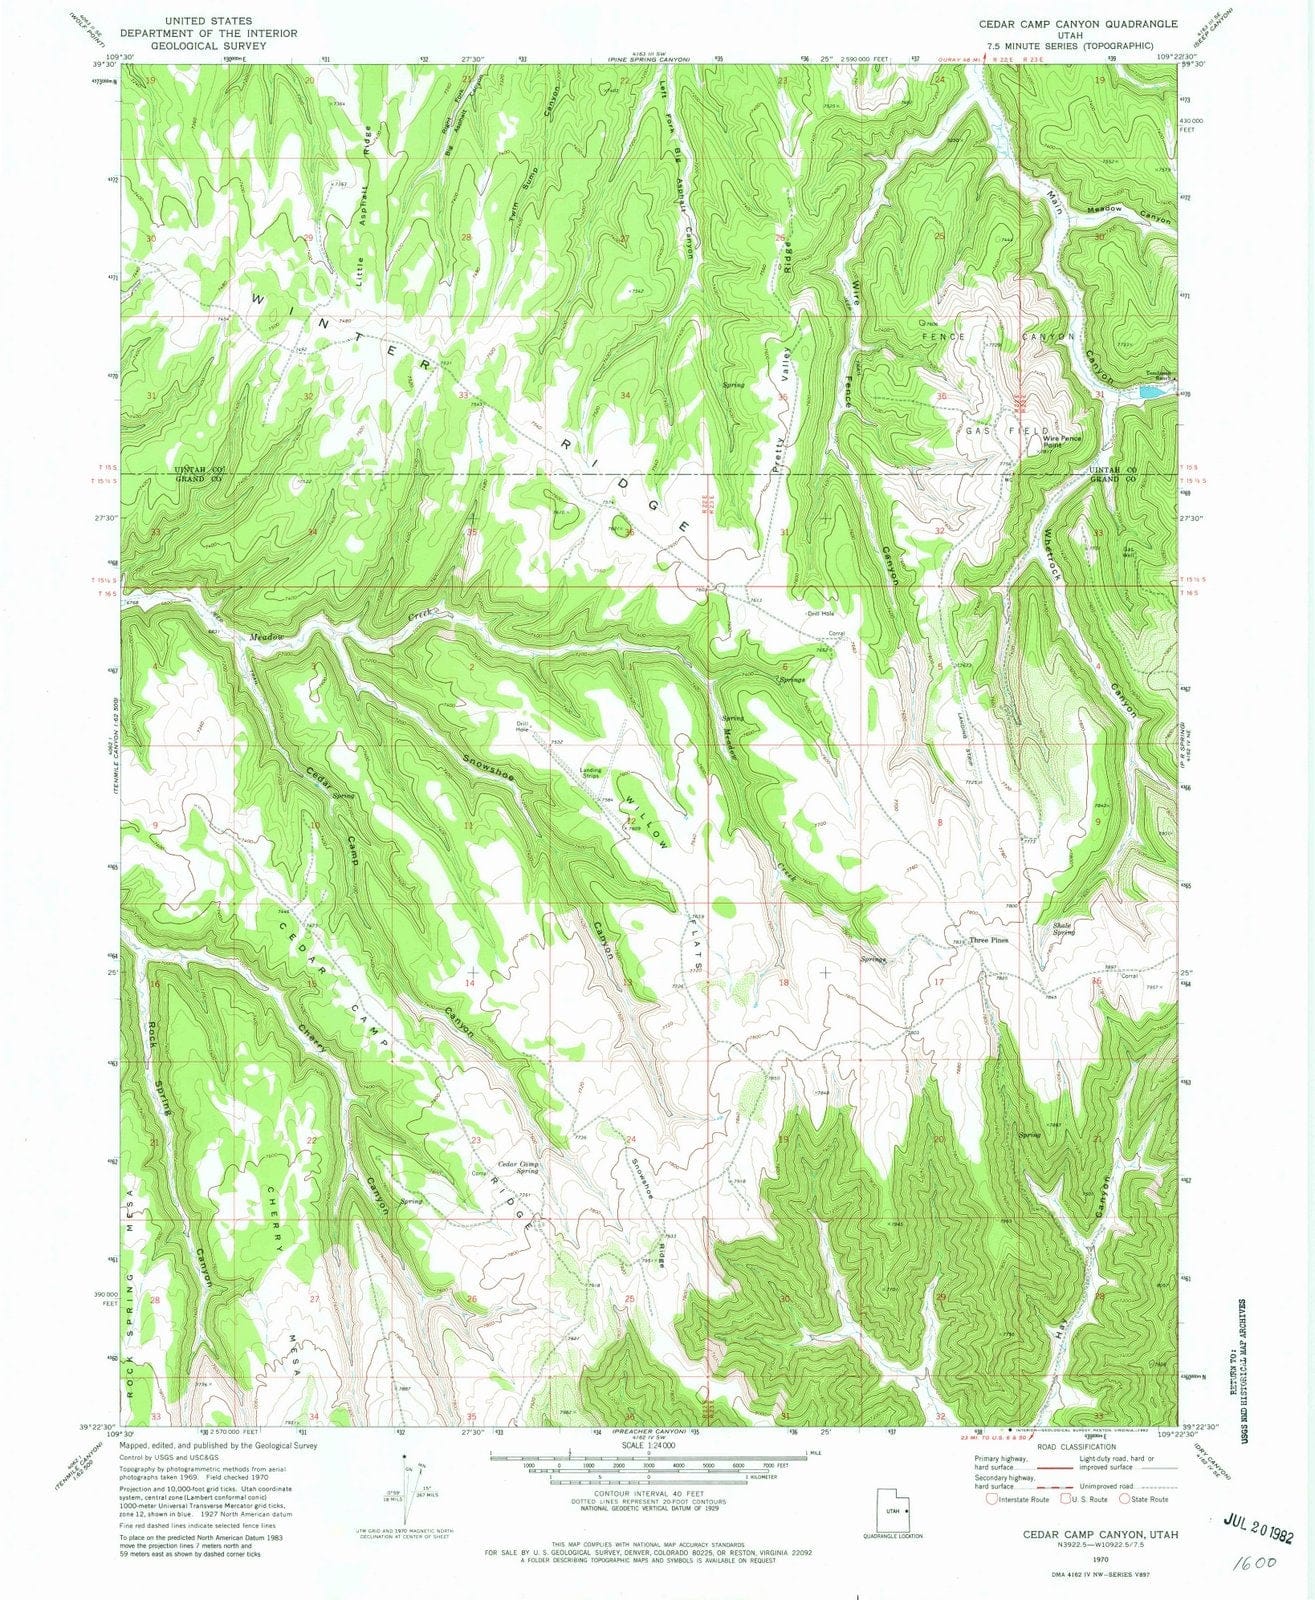 1970 Cedar Camp Canyon, UT - Utah - USGS Topographic Map